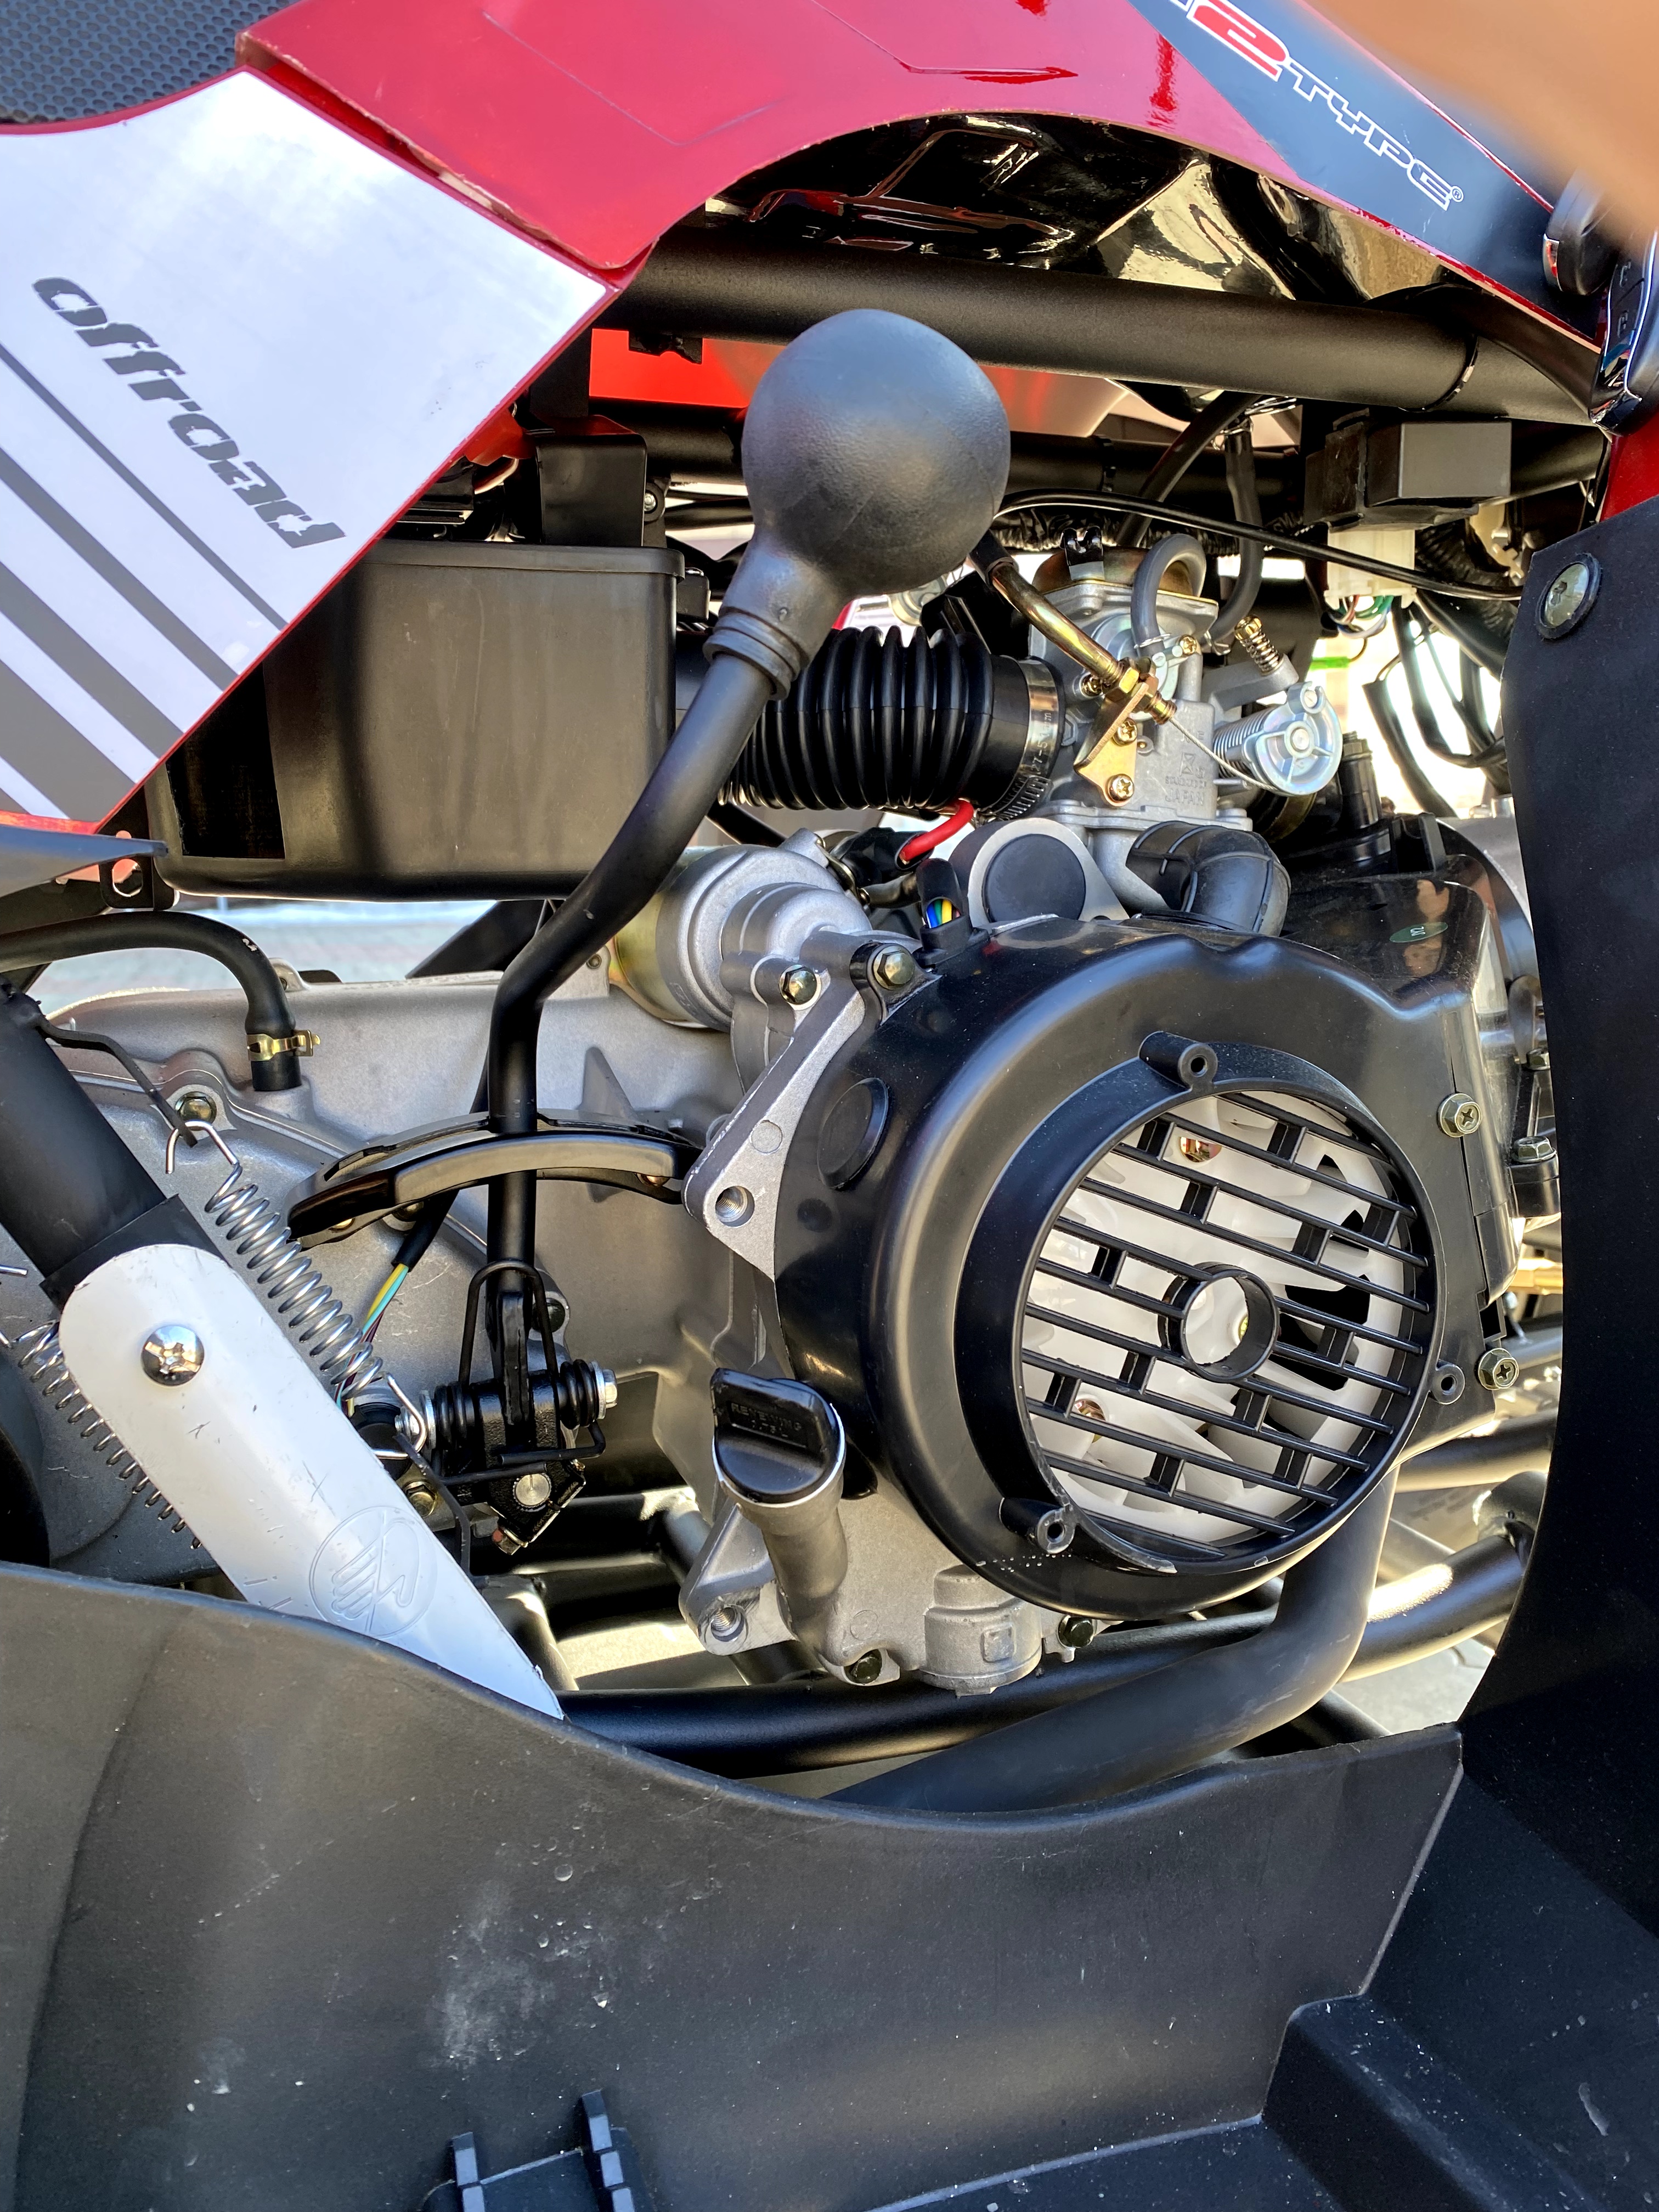 картинка Квадроцикл JAEGER 1.50 | Moped24